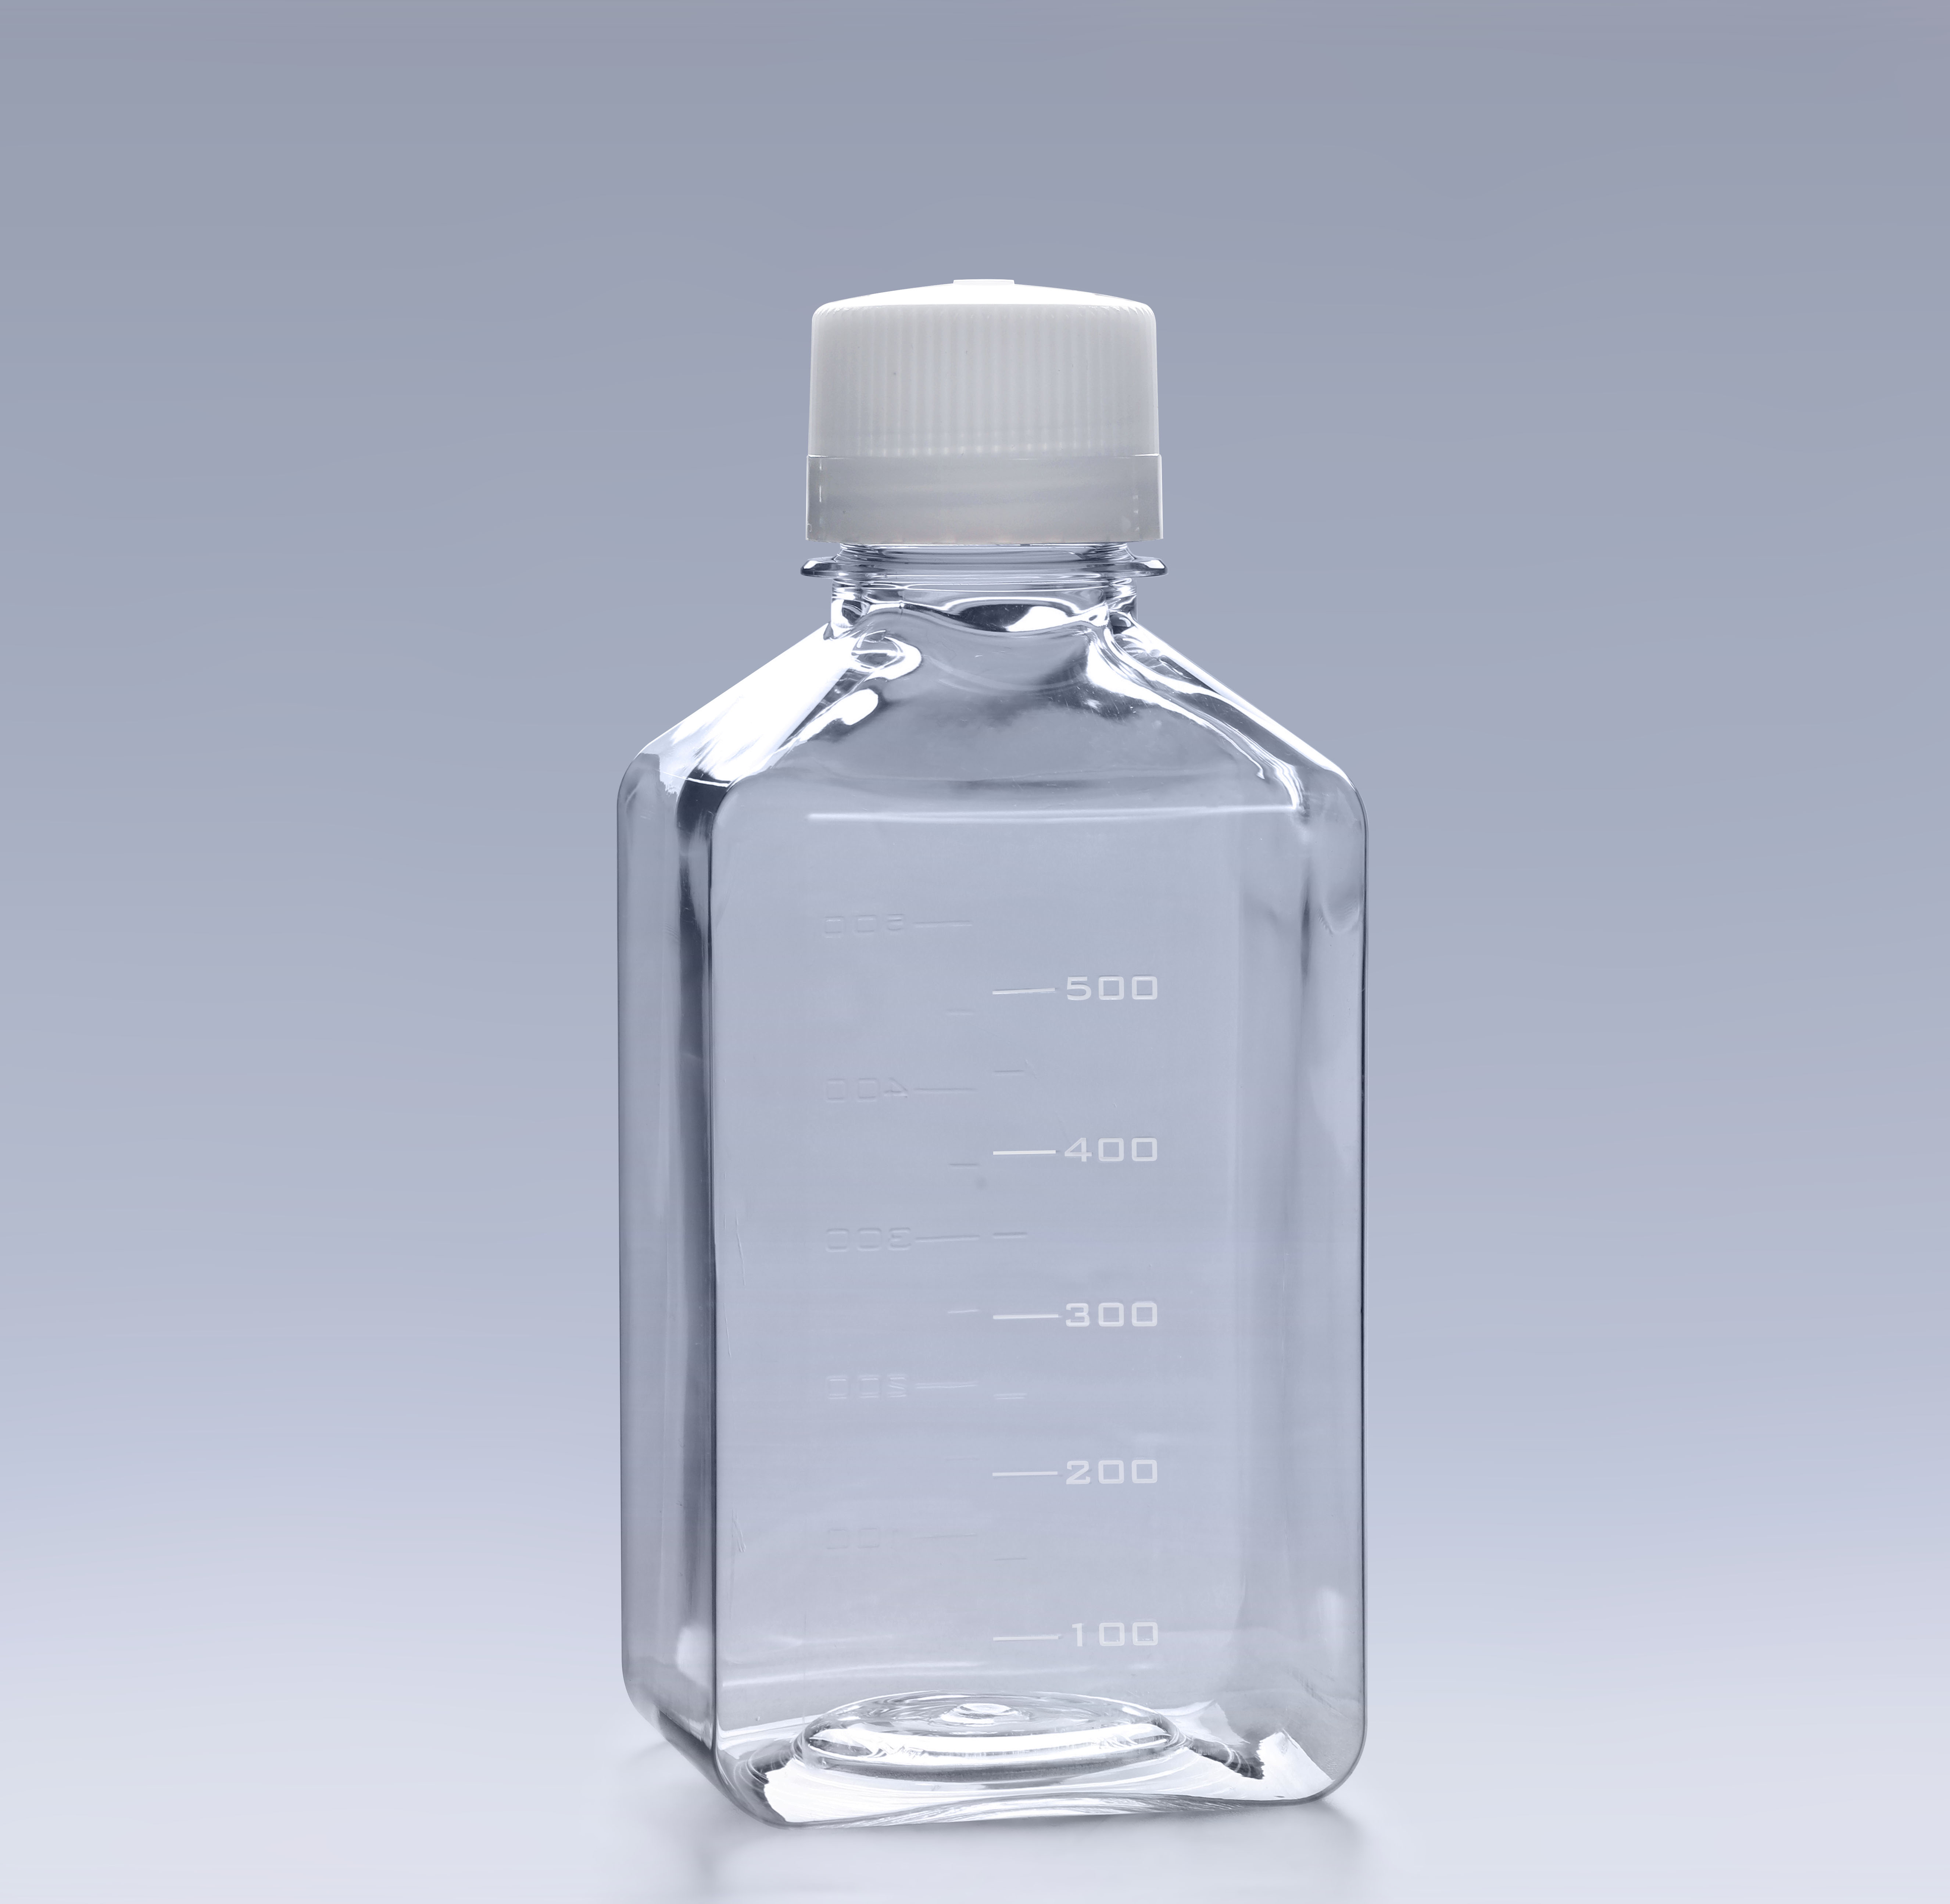 PETG血清瓶是影响血清质量的因素之一_富道细胞